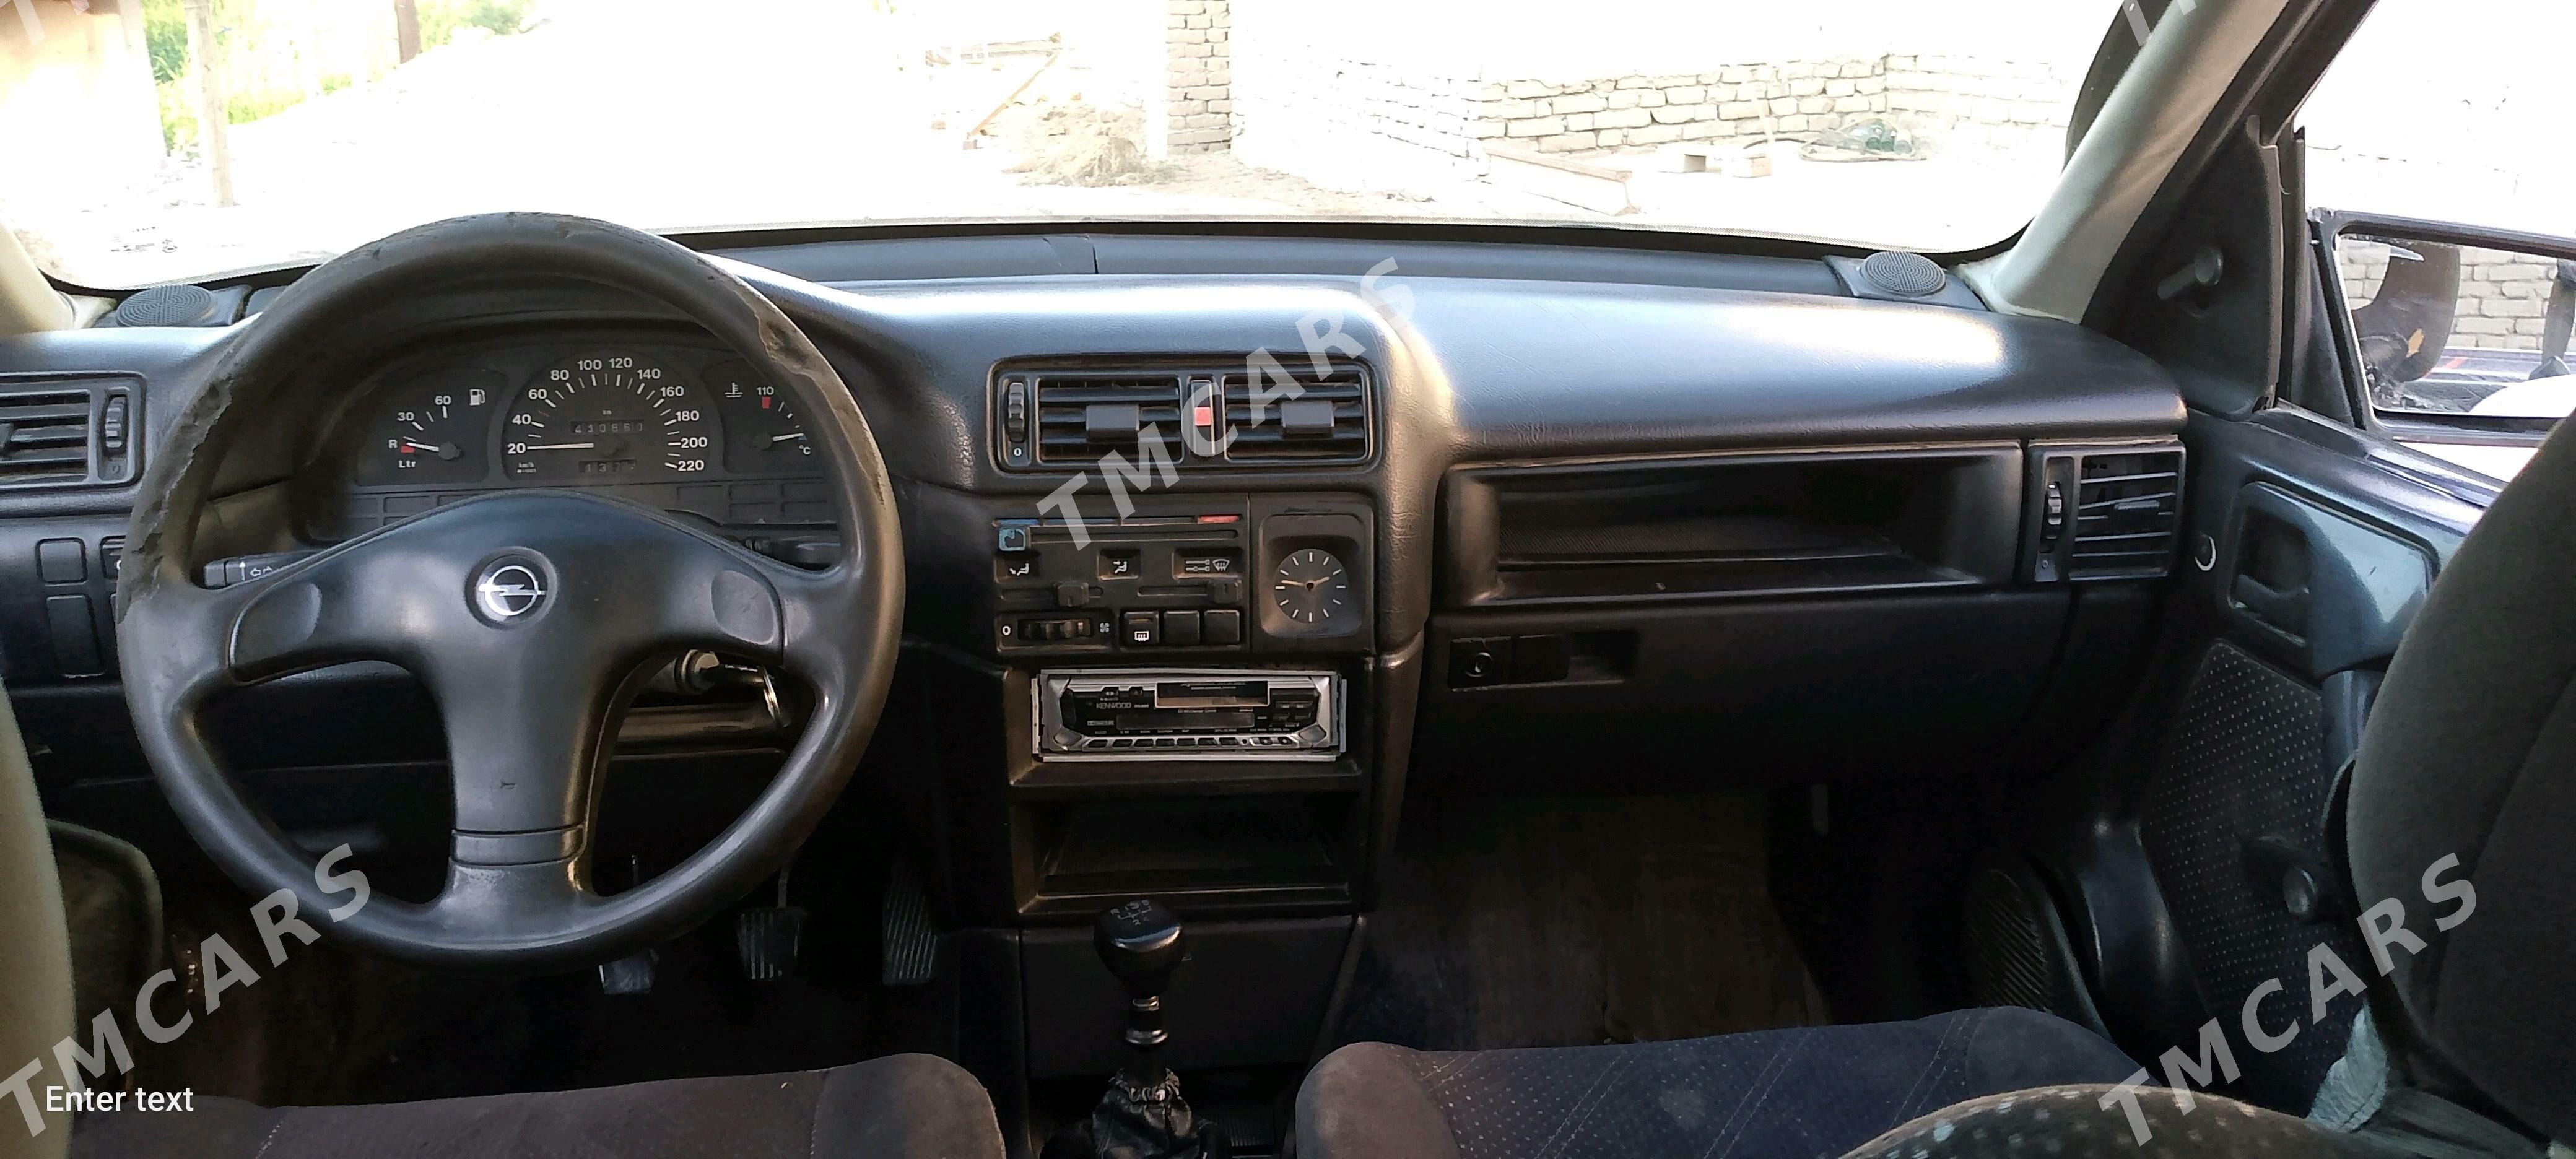 Opel Vectra 1993 - 26 000 TMT - Шабатский этрап - img 3